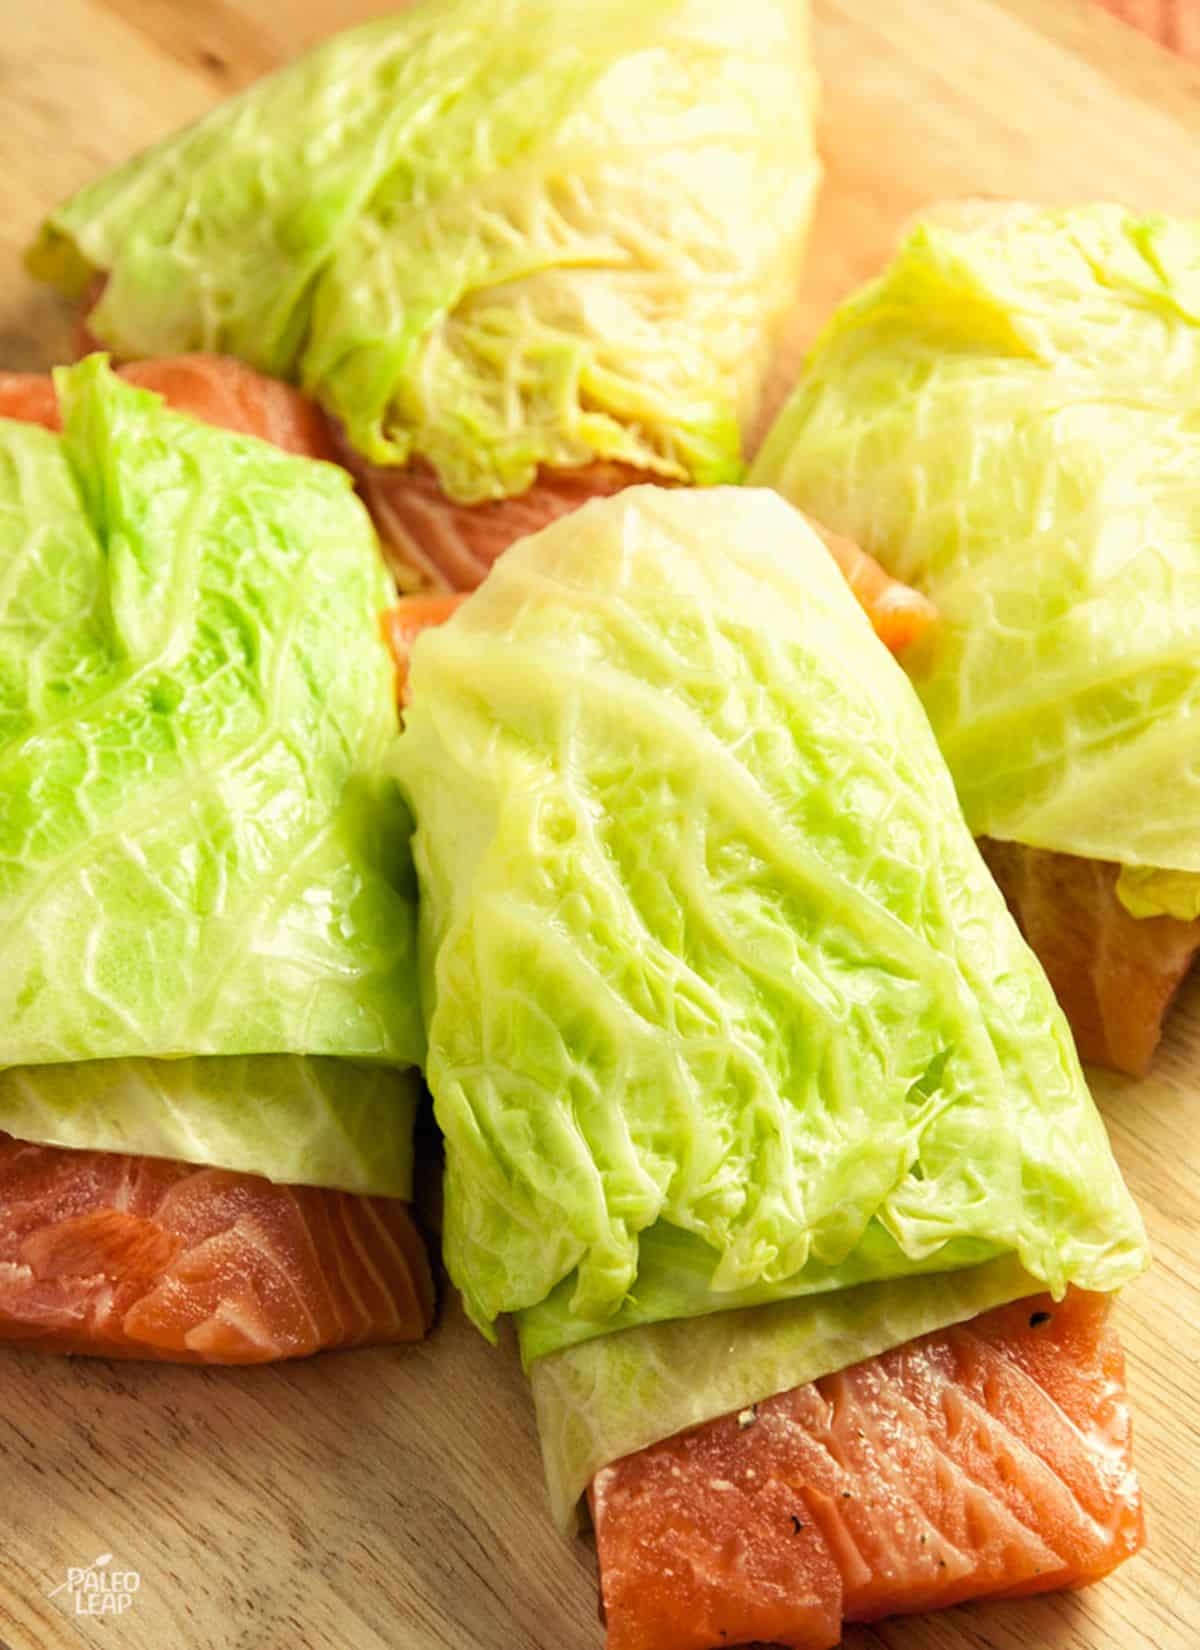 Cabbage-Wrapped Salmon Recipe Preparation